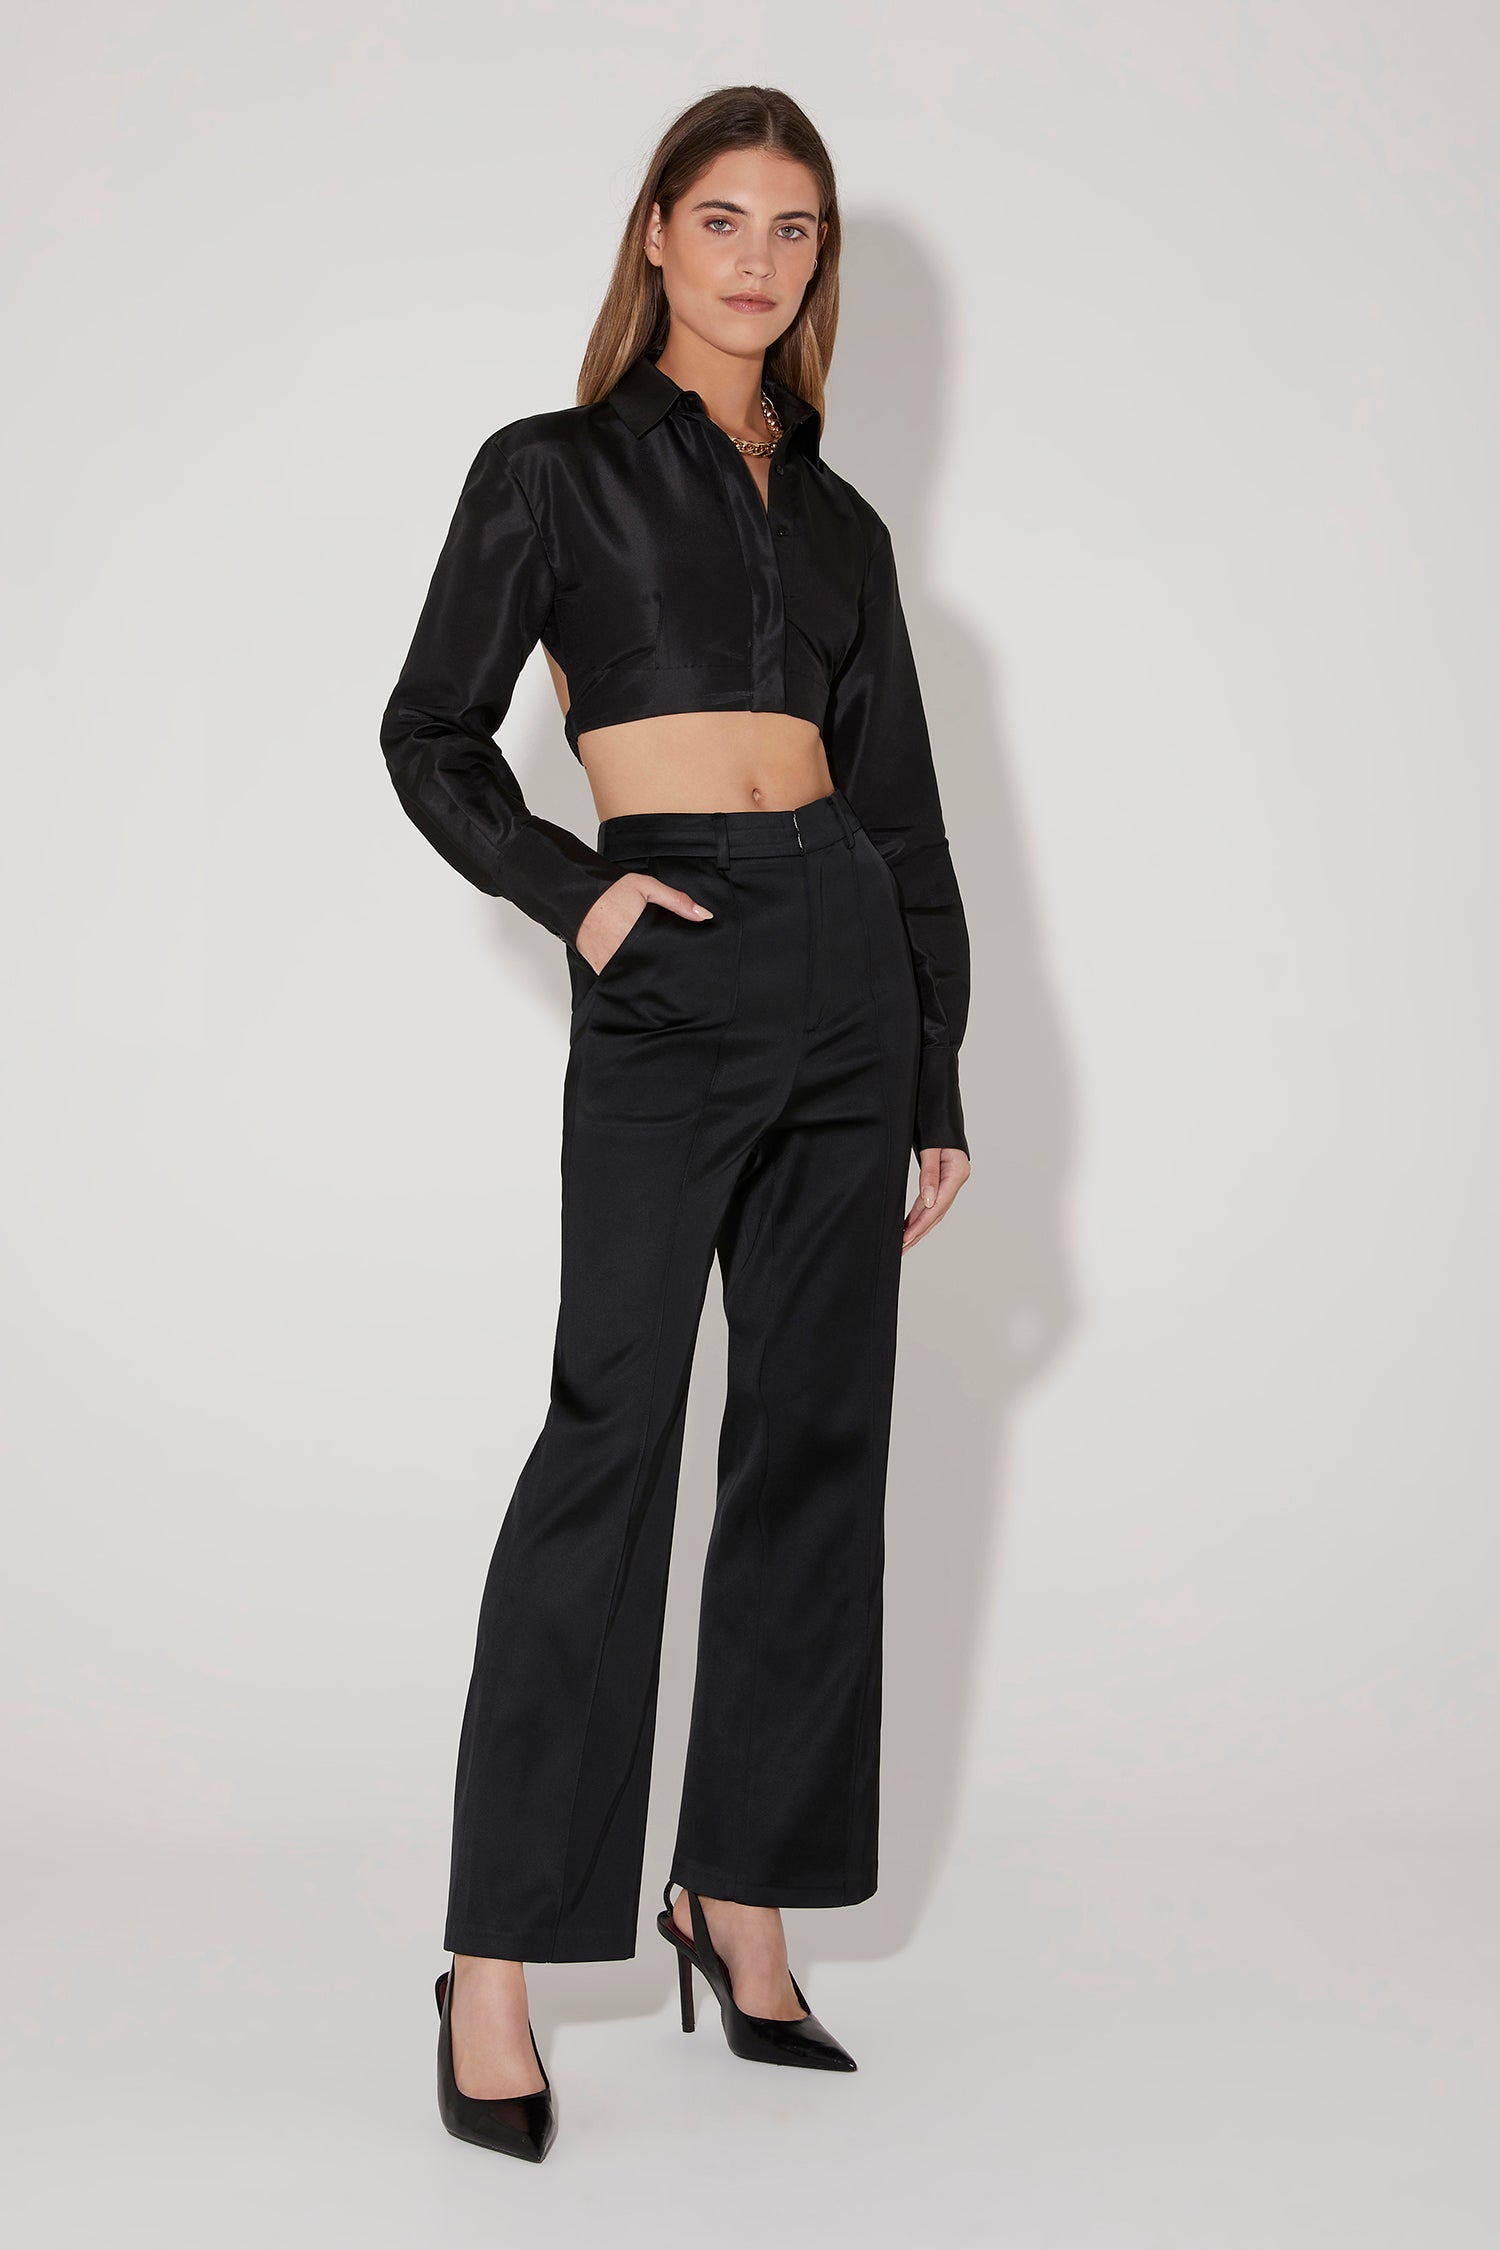 Yael Tailored Pant in Black | Leina & Fleur